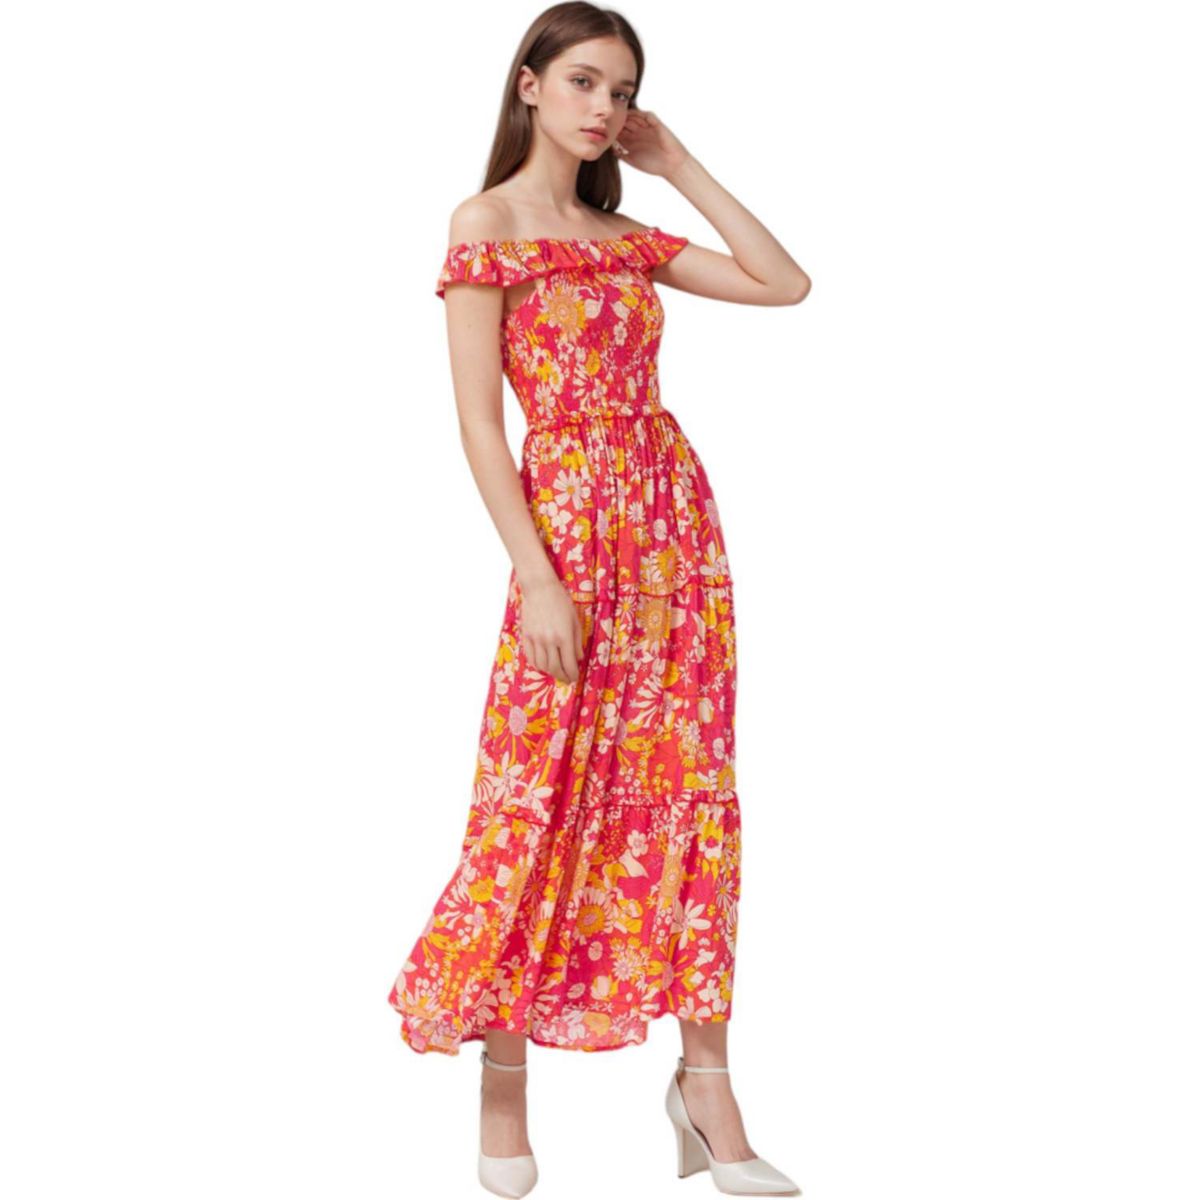 Women's Strappy Smocked Floral Dress Anna-Kaci